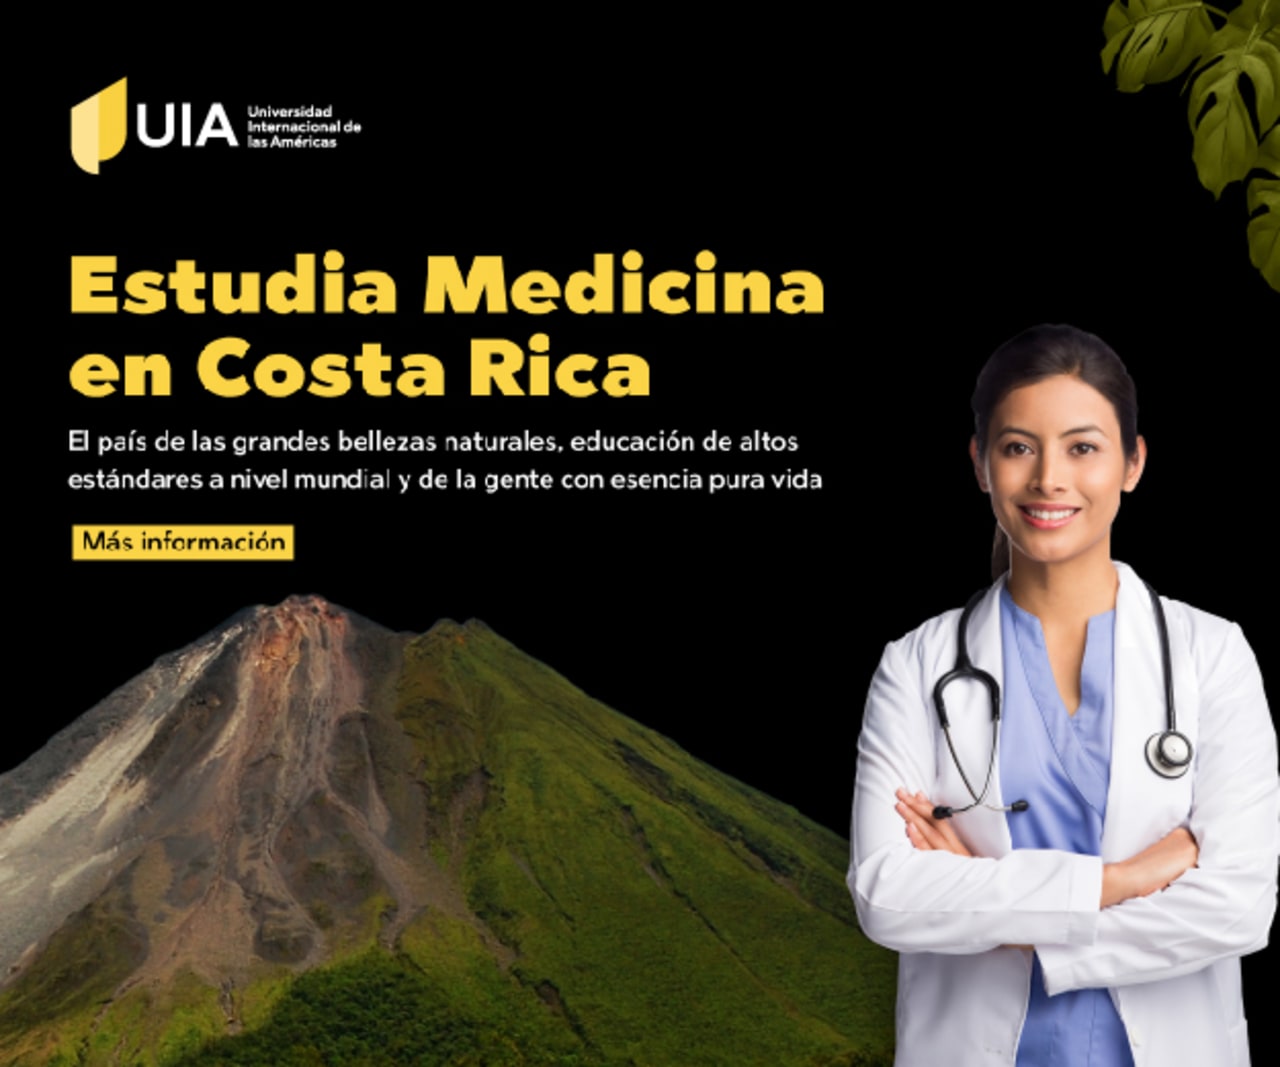 Universidad Internacional de las Américas कोस्टा रिका में अध्ययन चिकित्सा